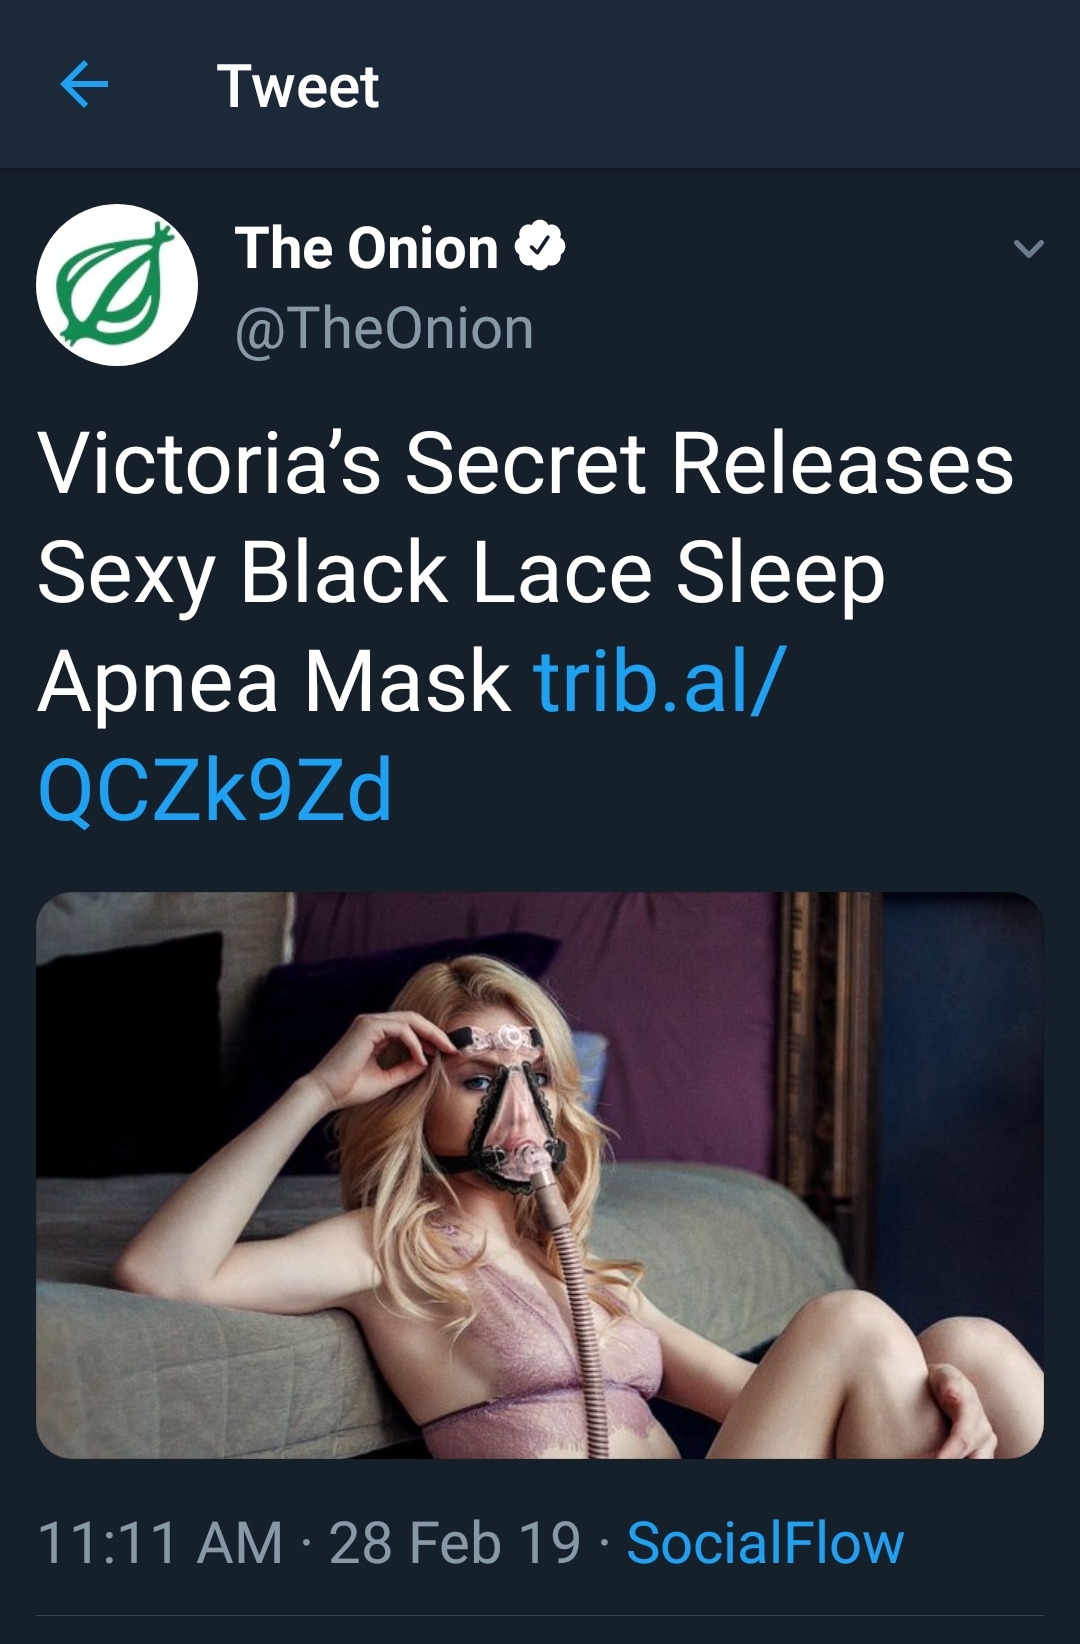 sleep apnea sexy - Tweet The Onion Victoria's Secret Releases Sexy Black Lace Sleep Apnea Mask trib.al QCZK9Zd 28 Feb 19. SocialFlow